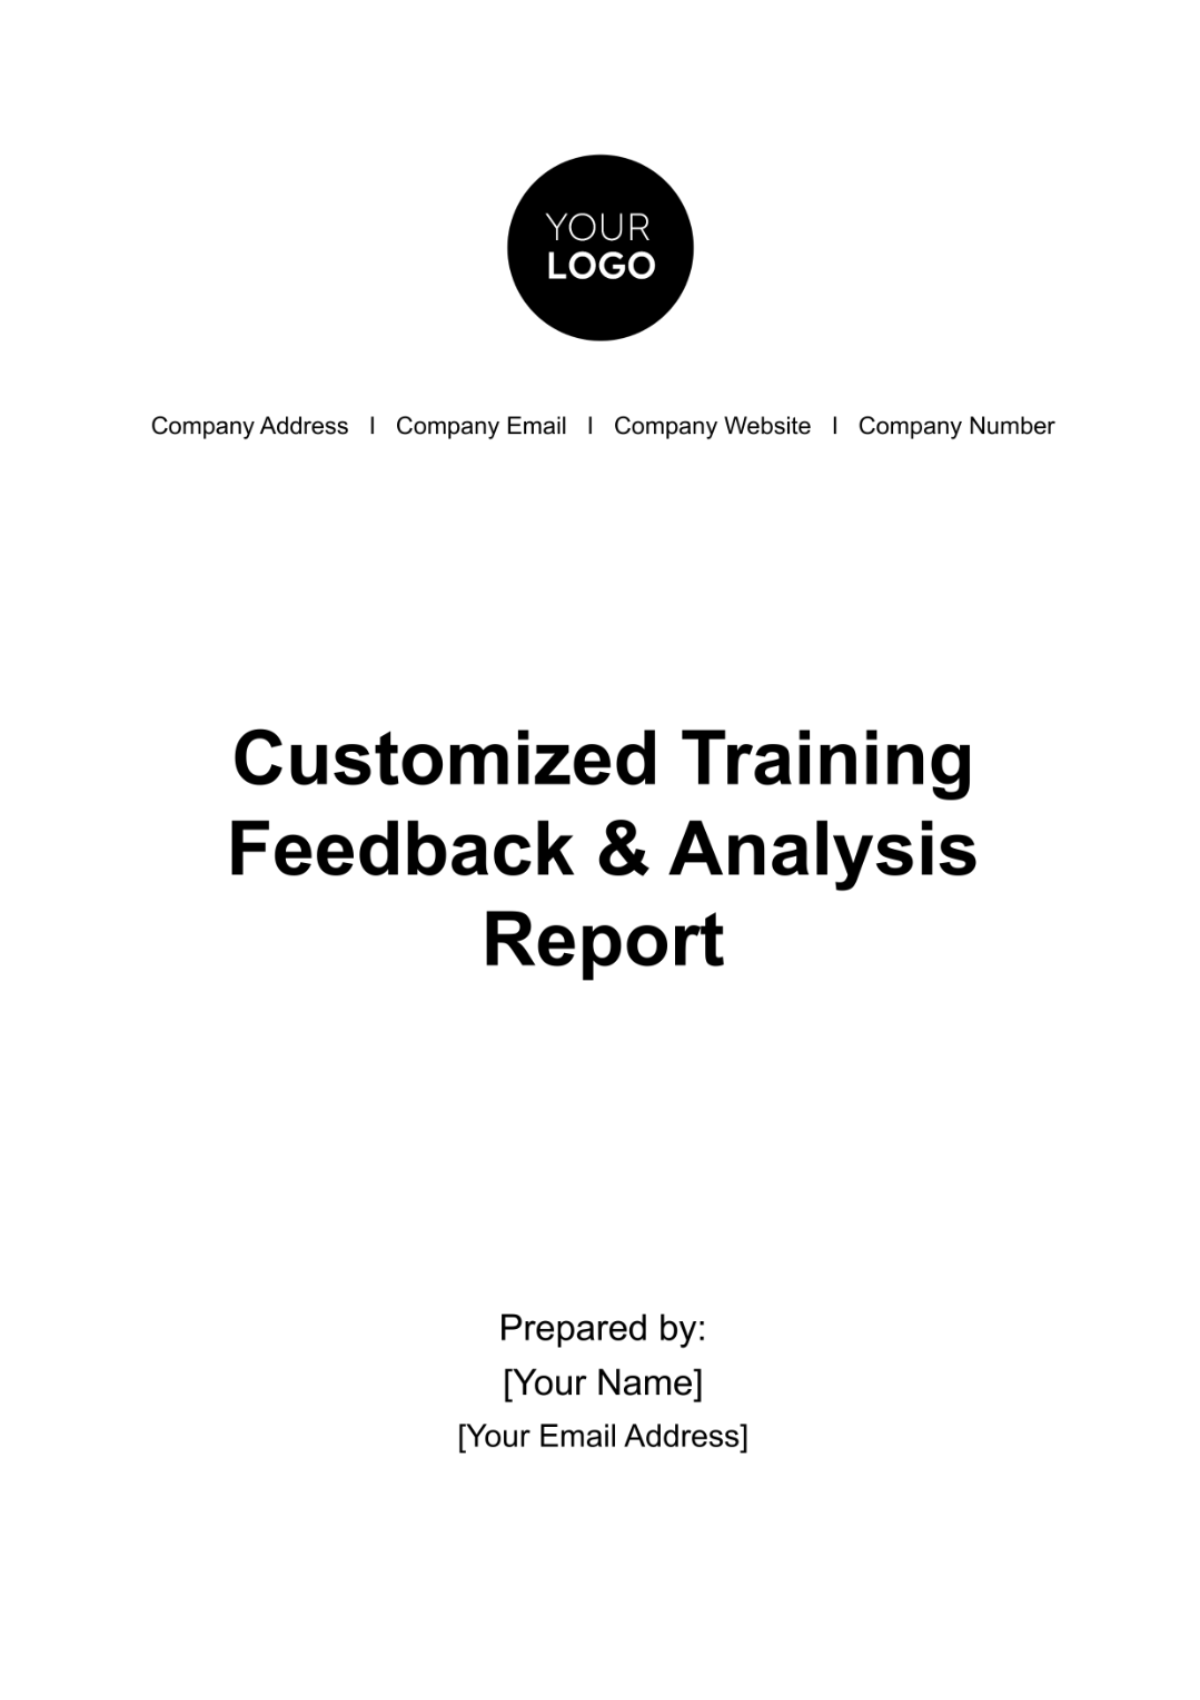 Free Customized Training Feedback & Analysis Report HR Template